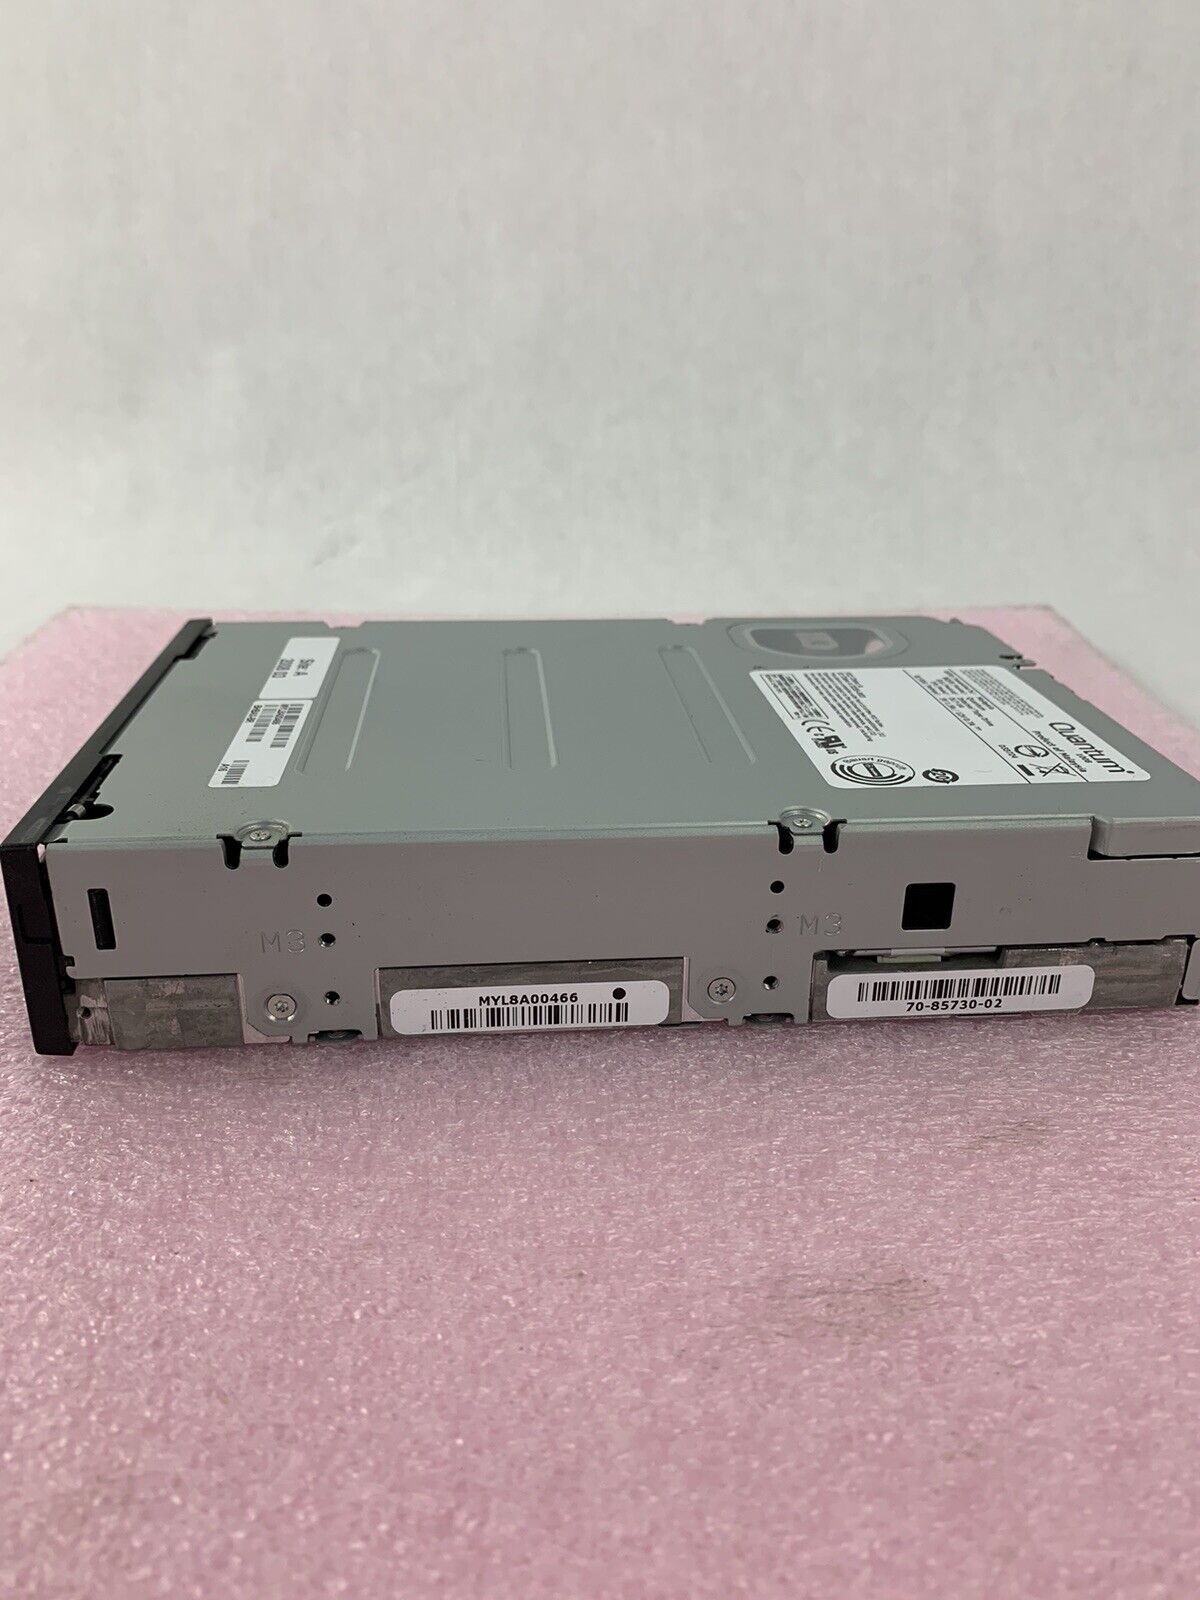 Quantum DLT-V4e External DLT Tape Drive